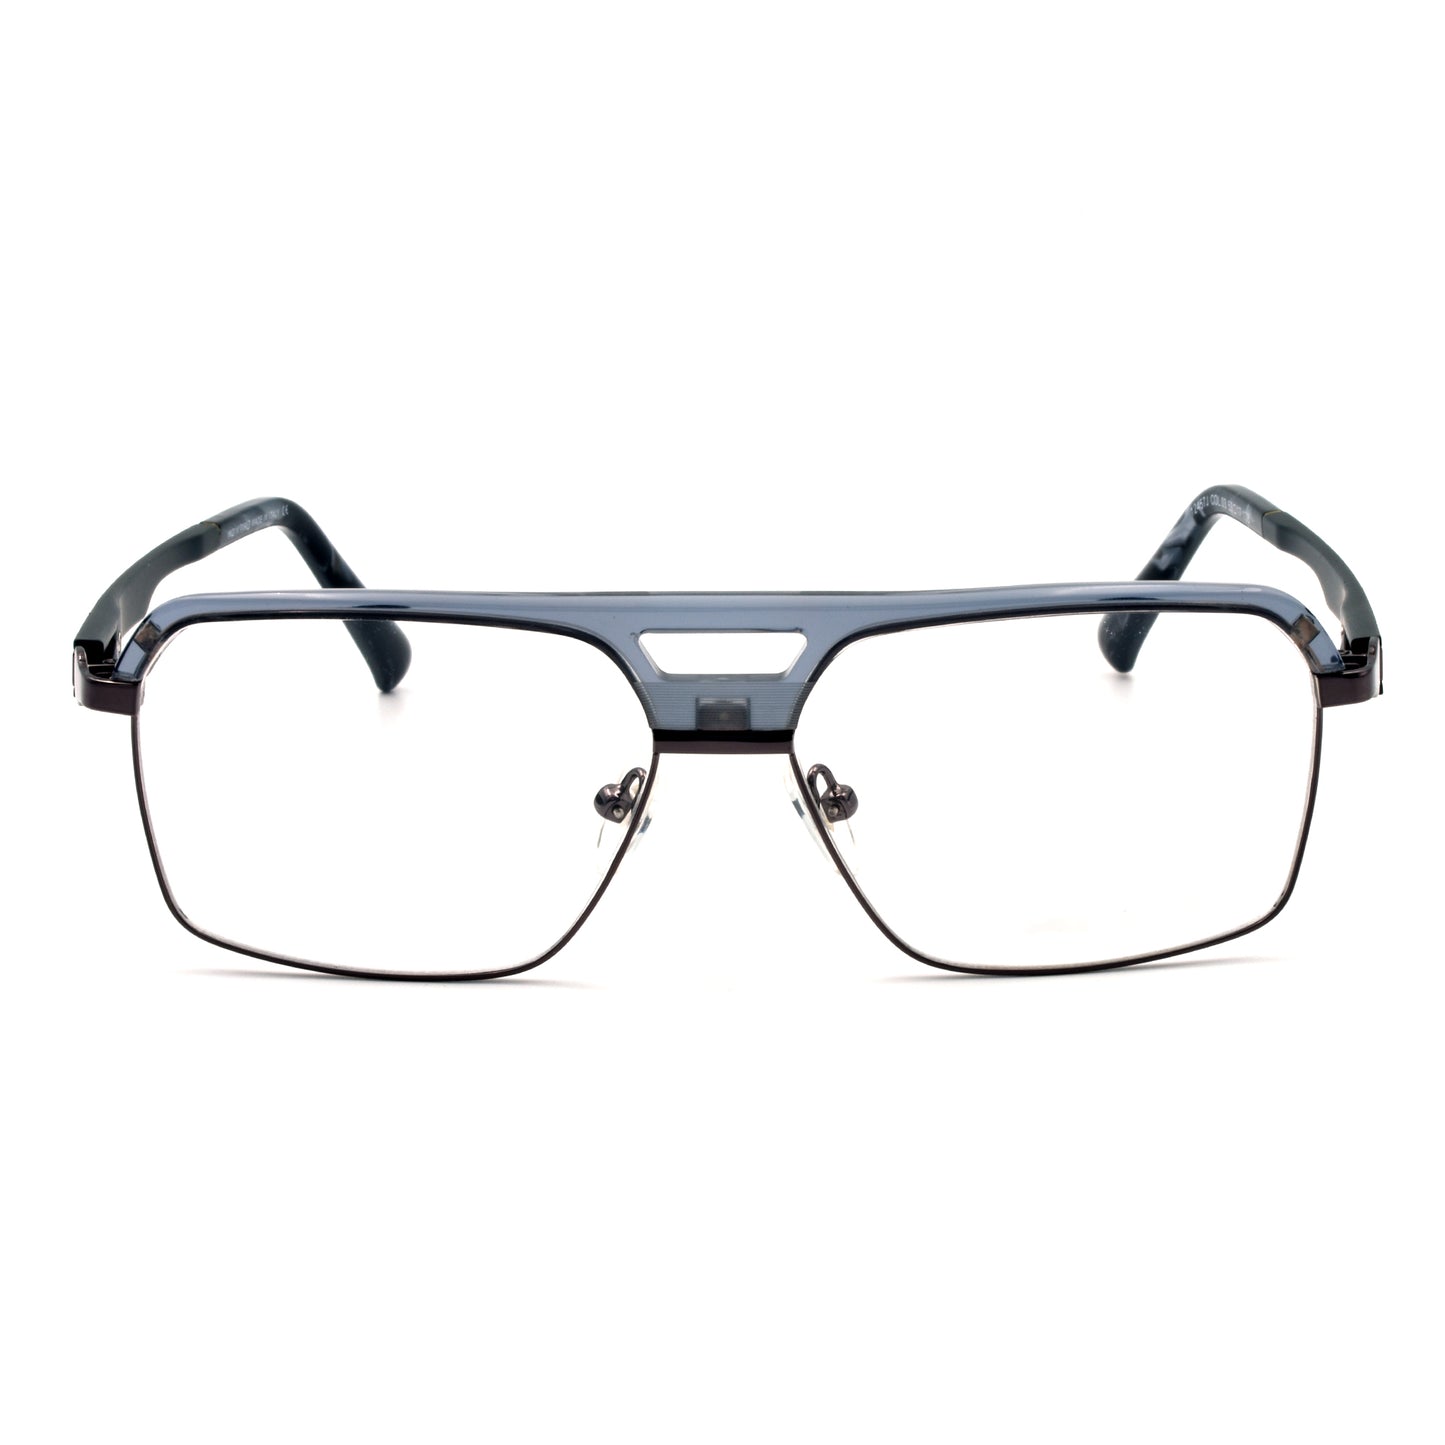 Trendy Stylish Optic Frame | TFord Frame 19 | Premium Quality